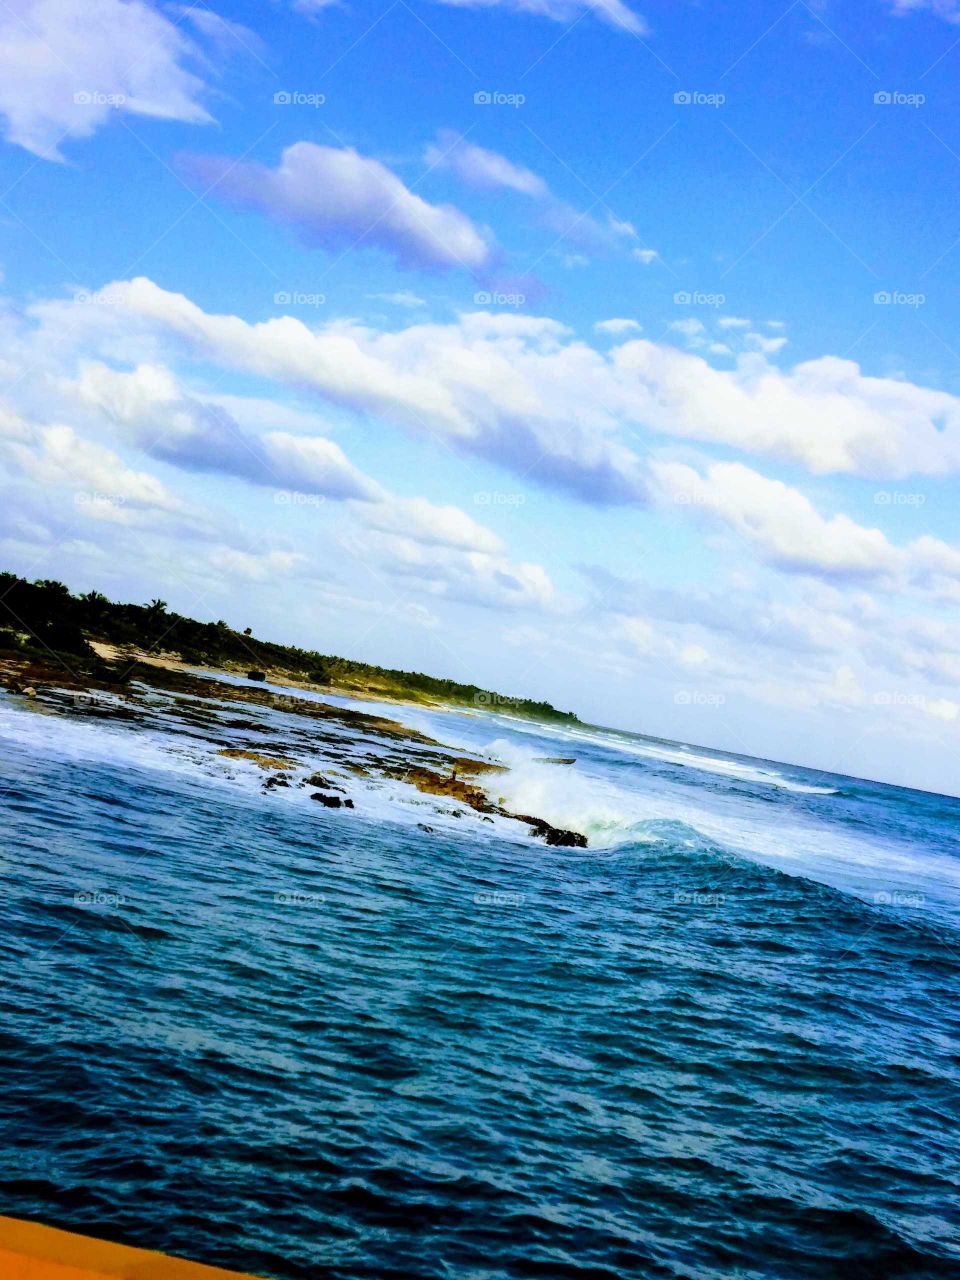 Perfectly blue waves crashing against the shore of Costa Maya.